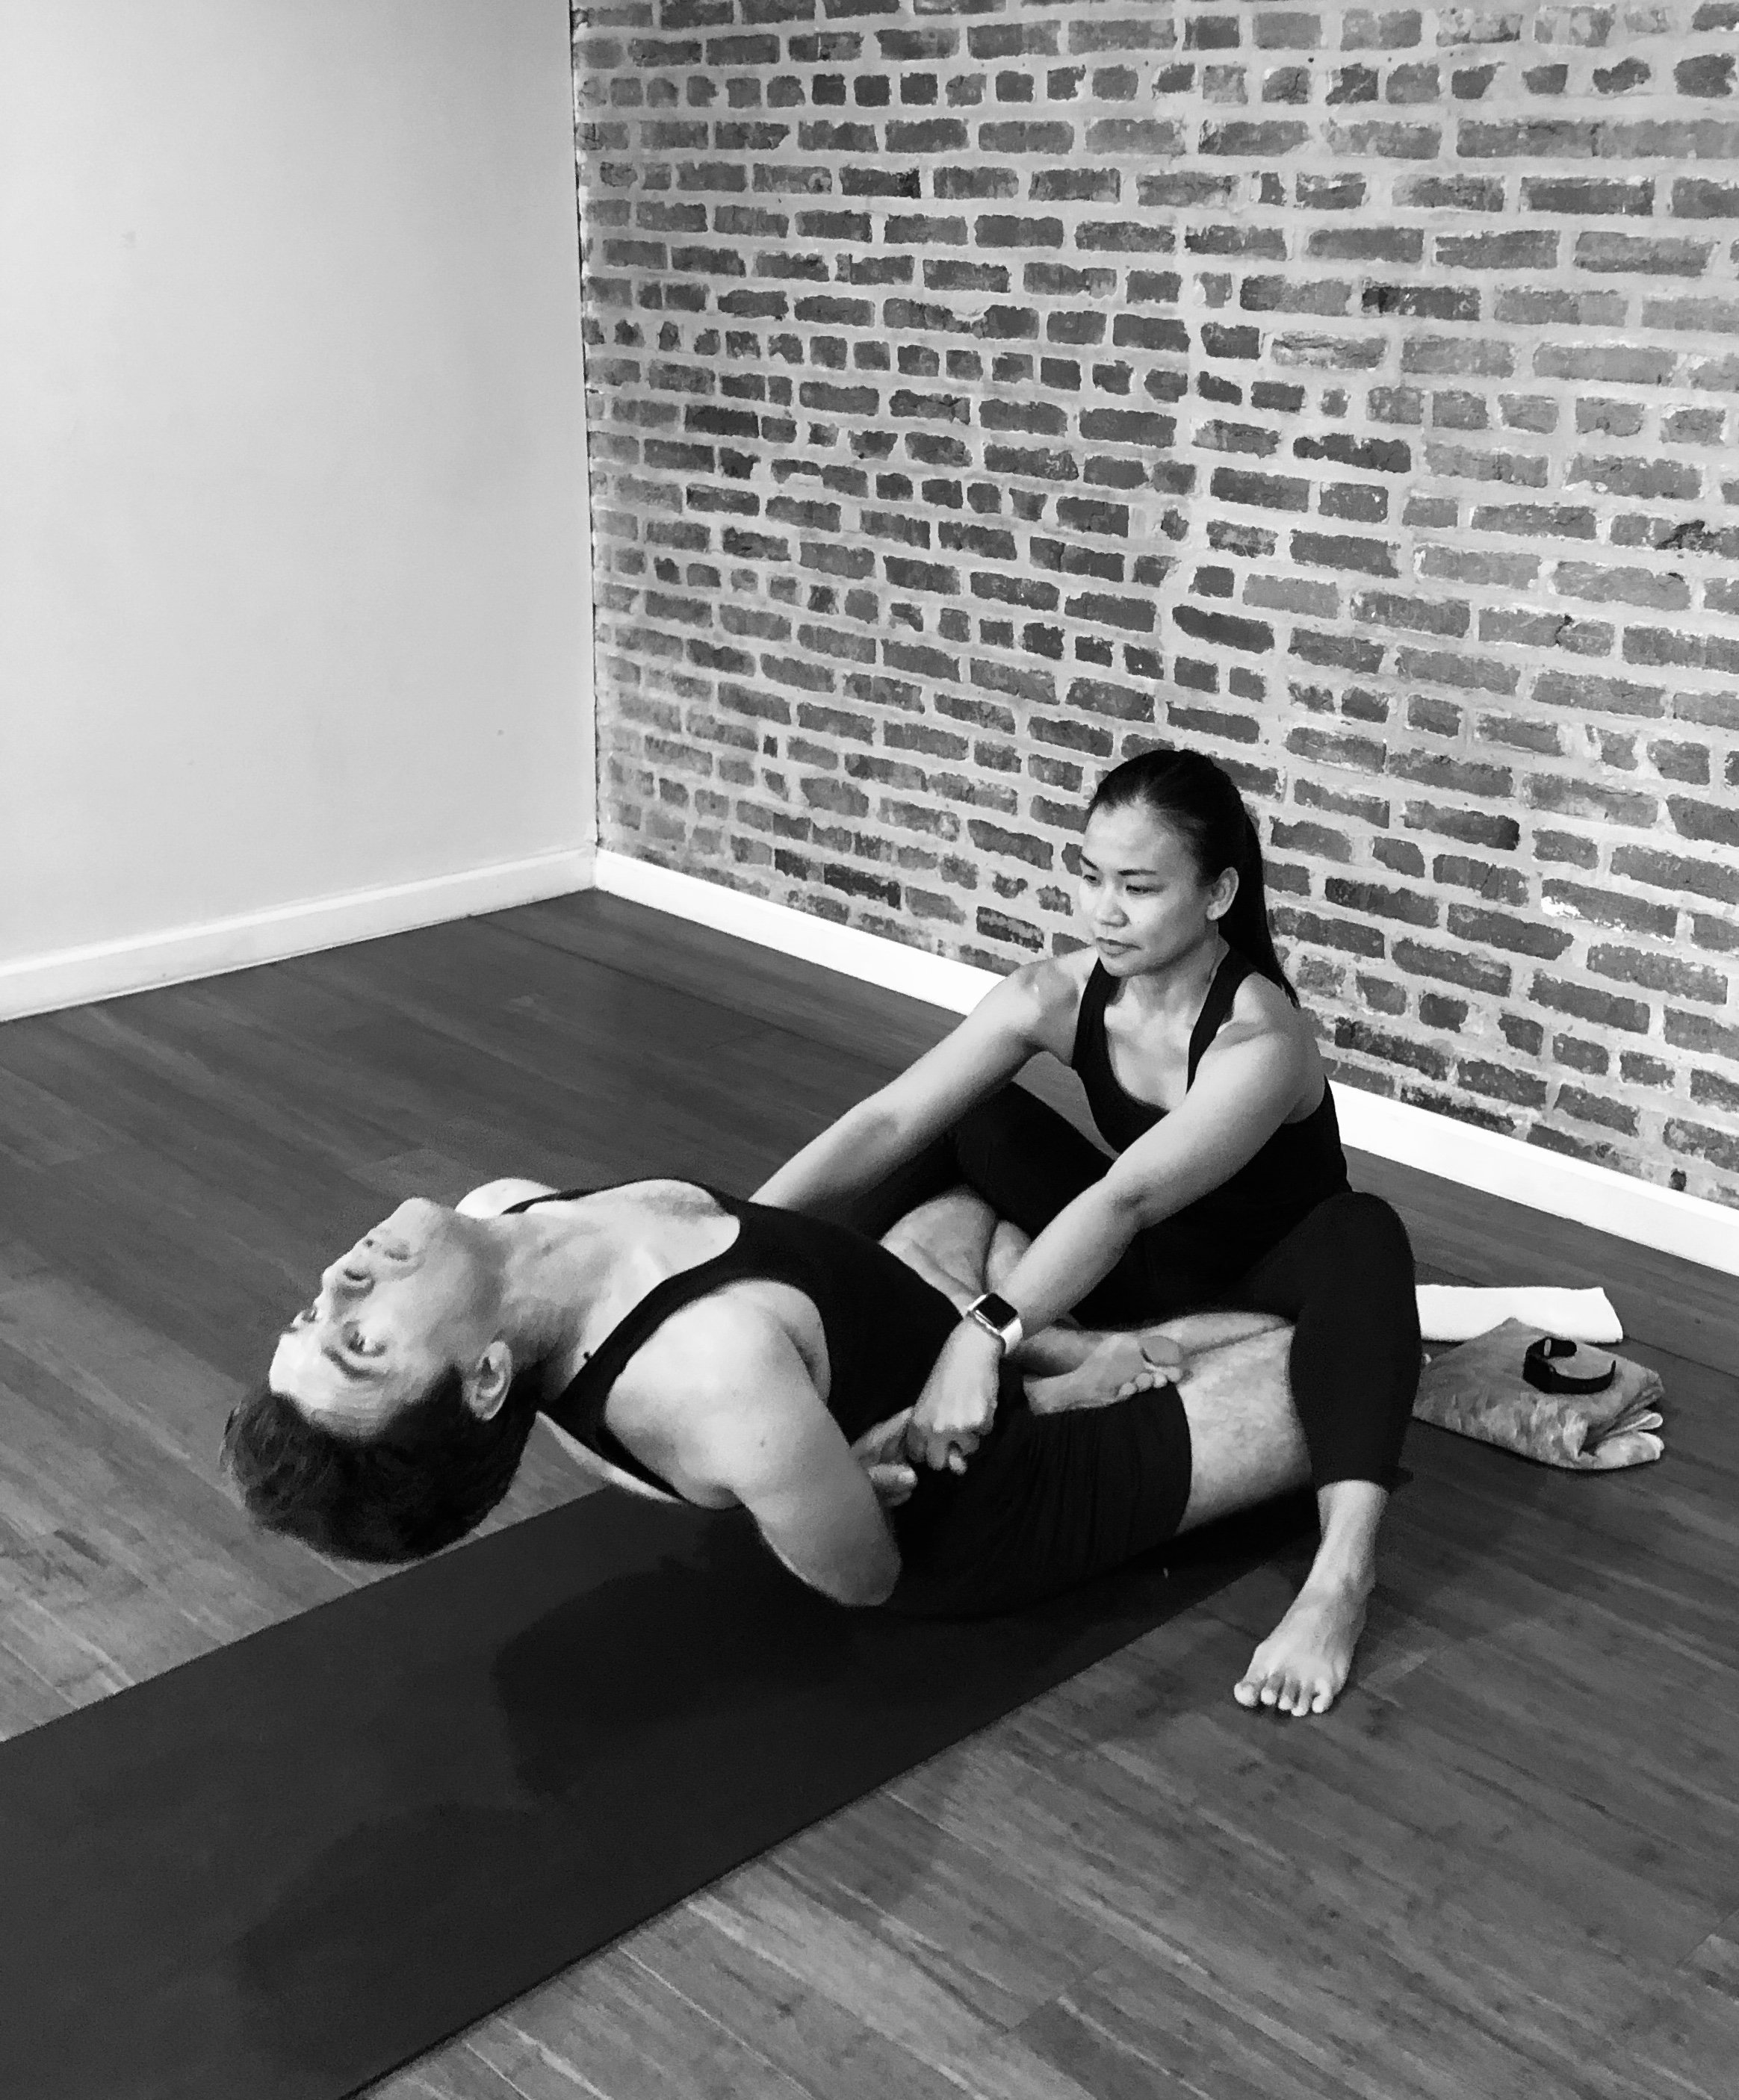 Special Online Sessions with Linda - Ashtanga Yoga Paris